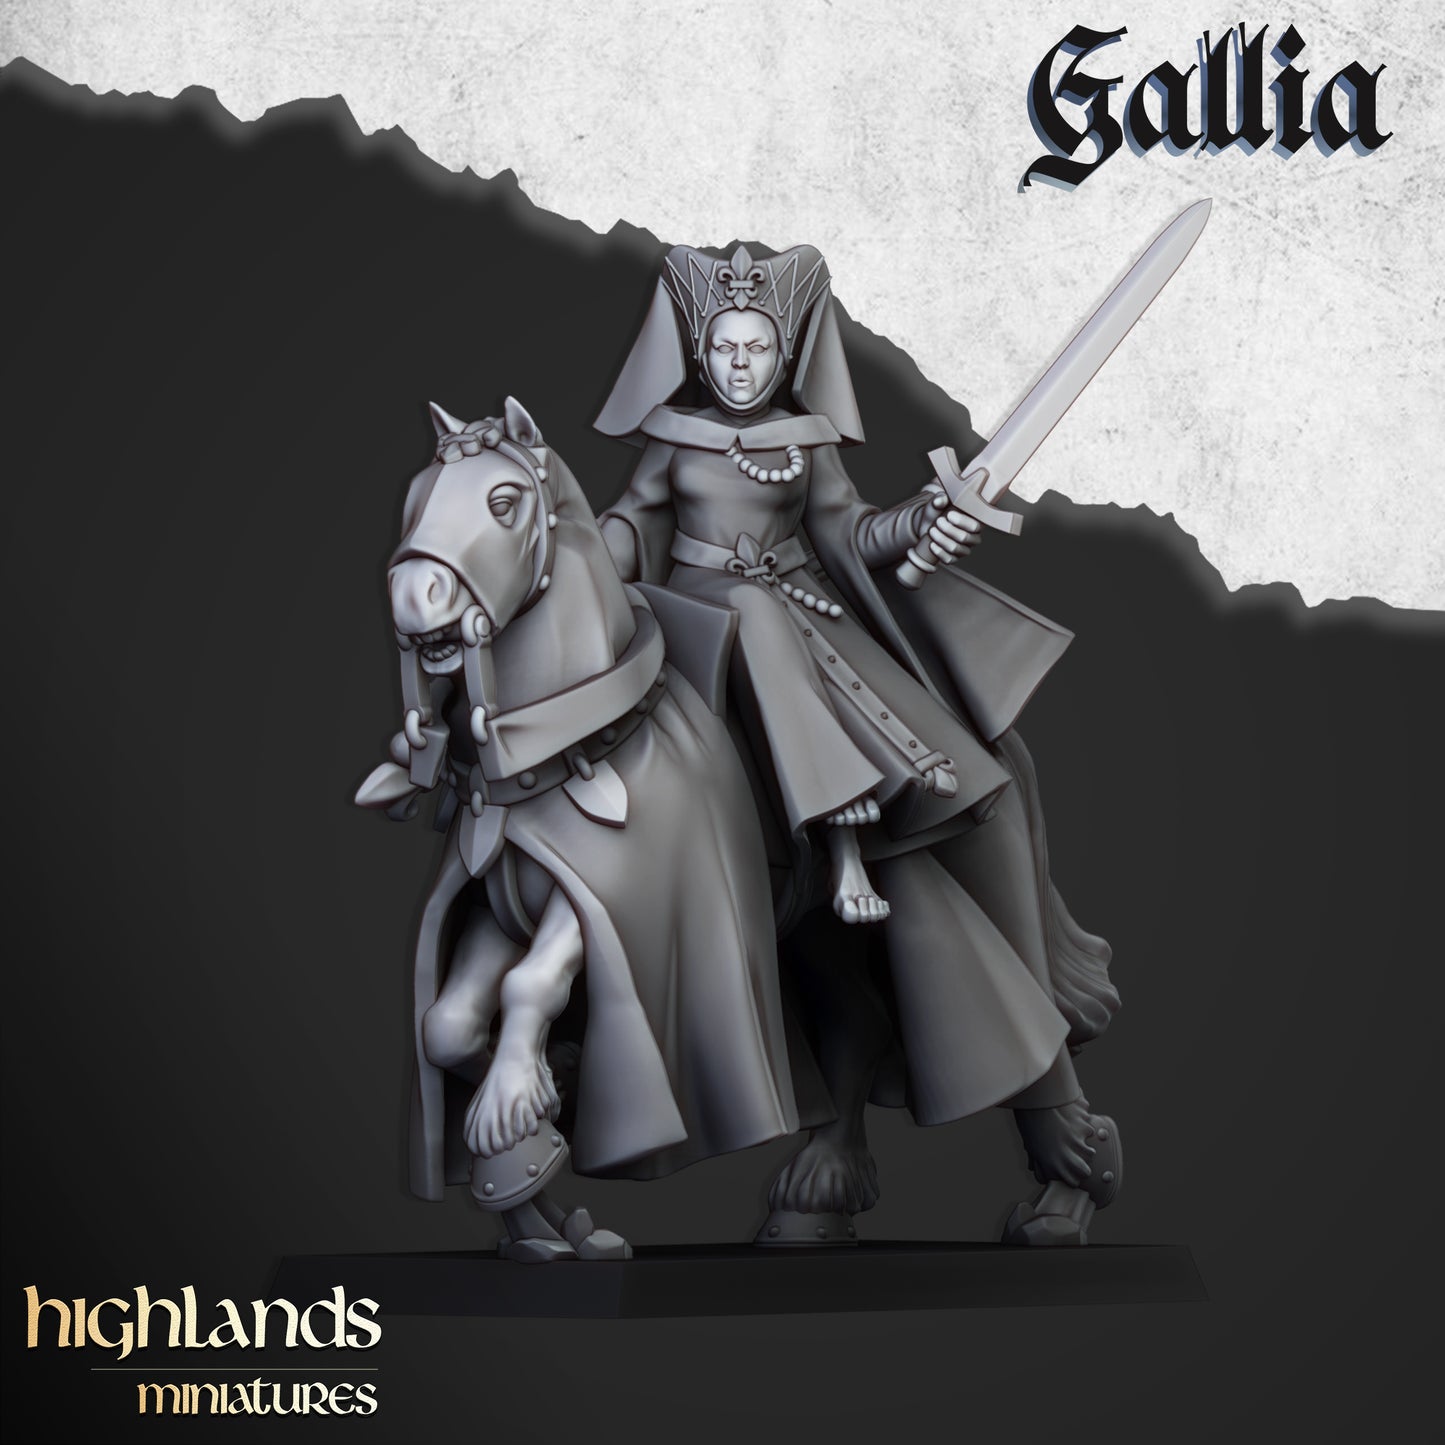 Gallia Damsel #2 by Highlands Miniatures